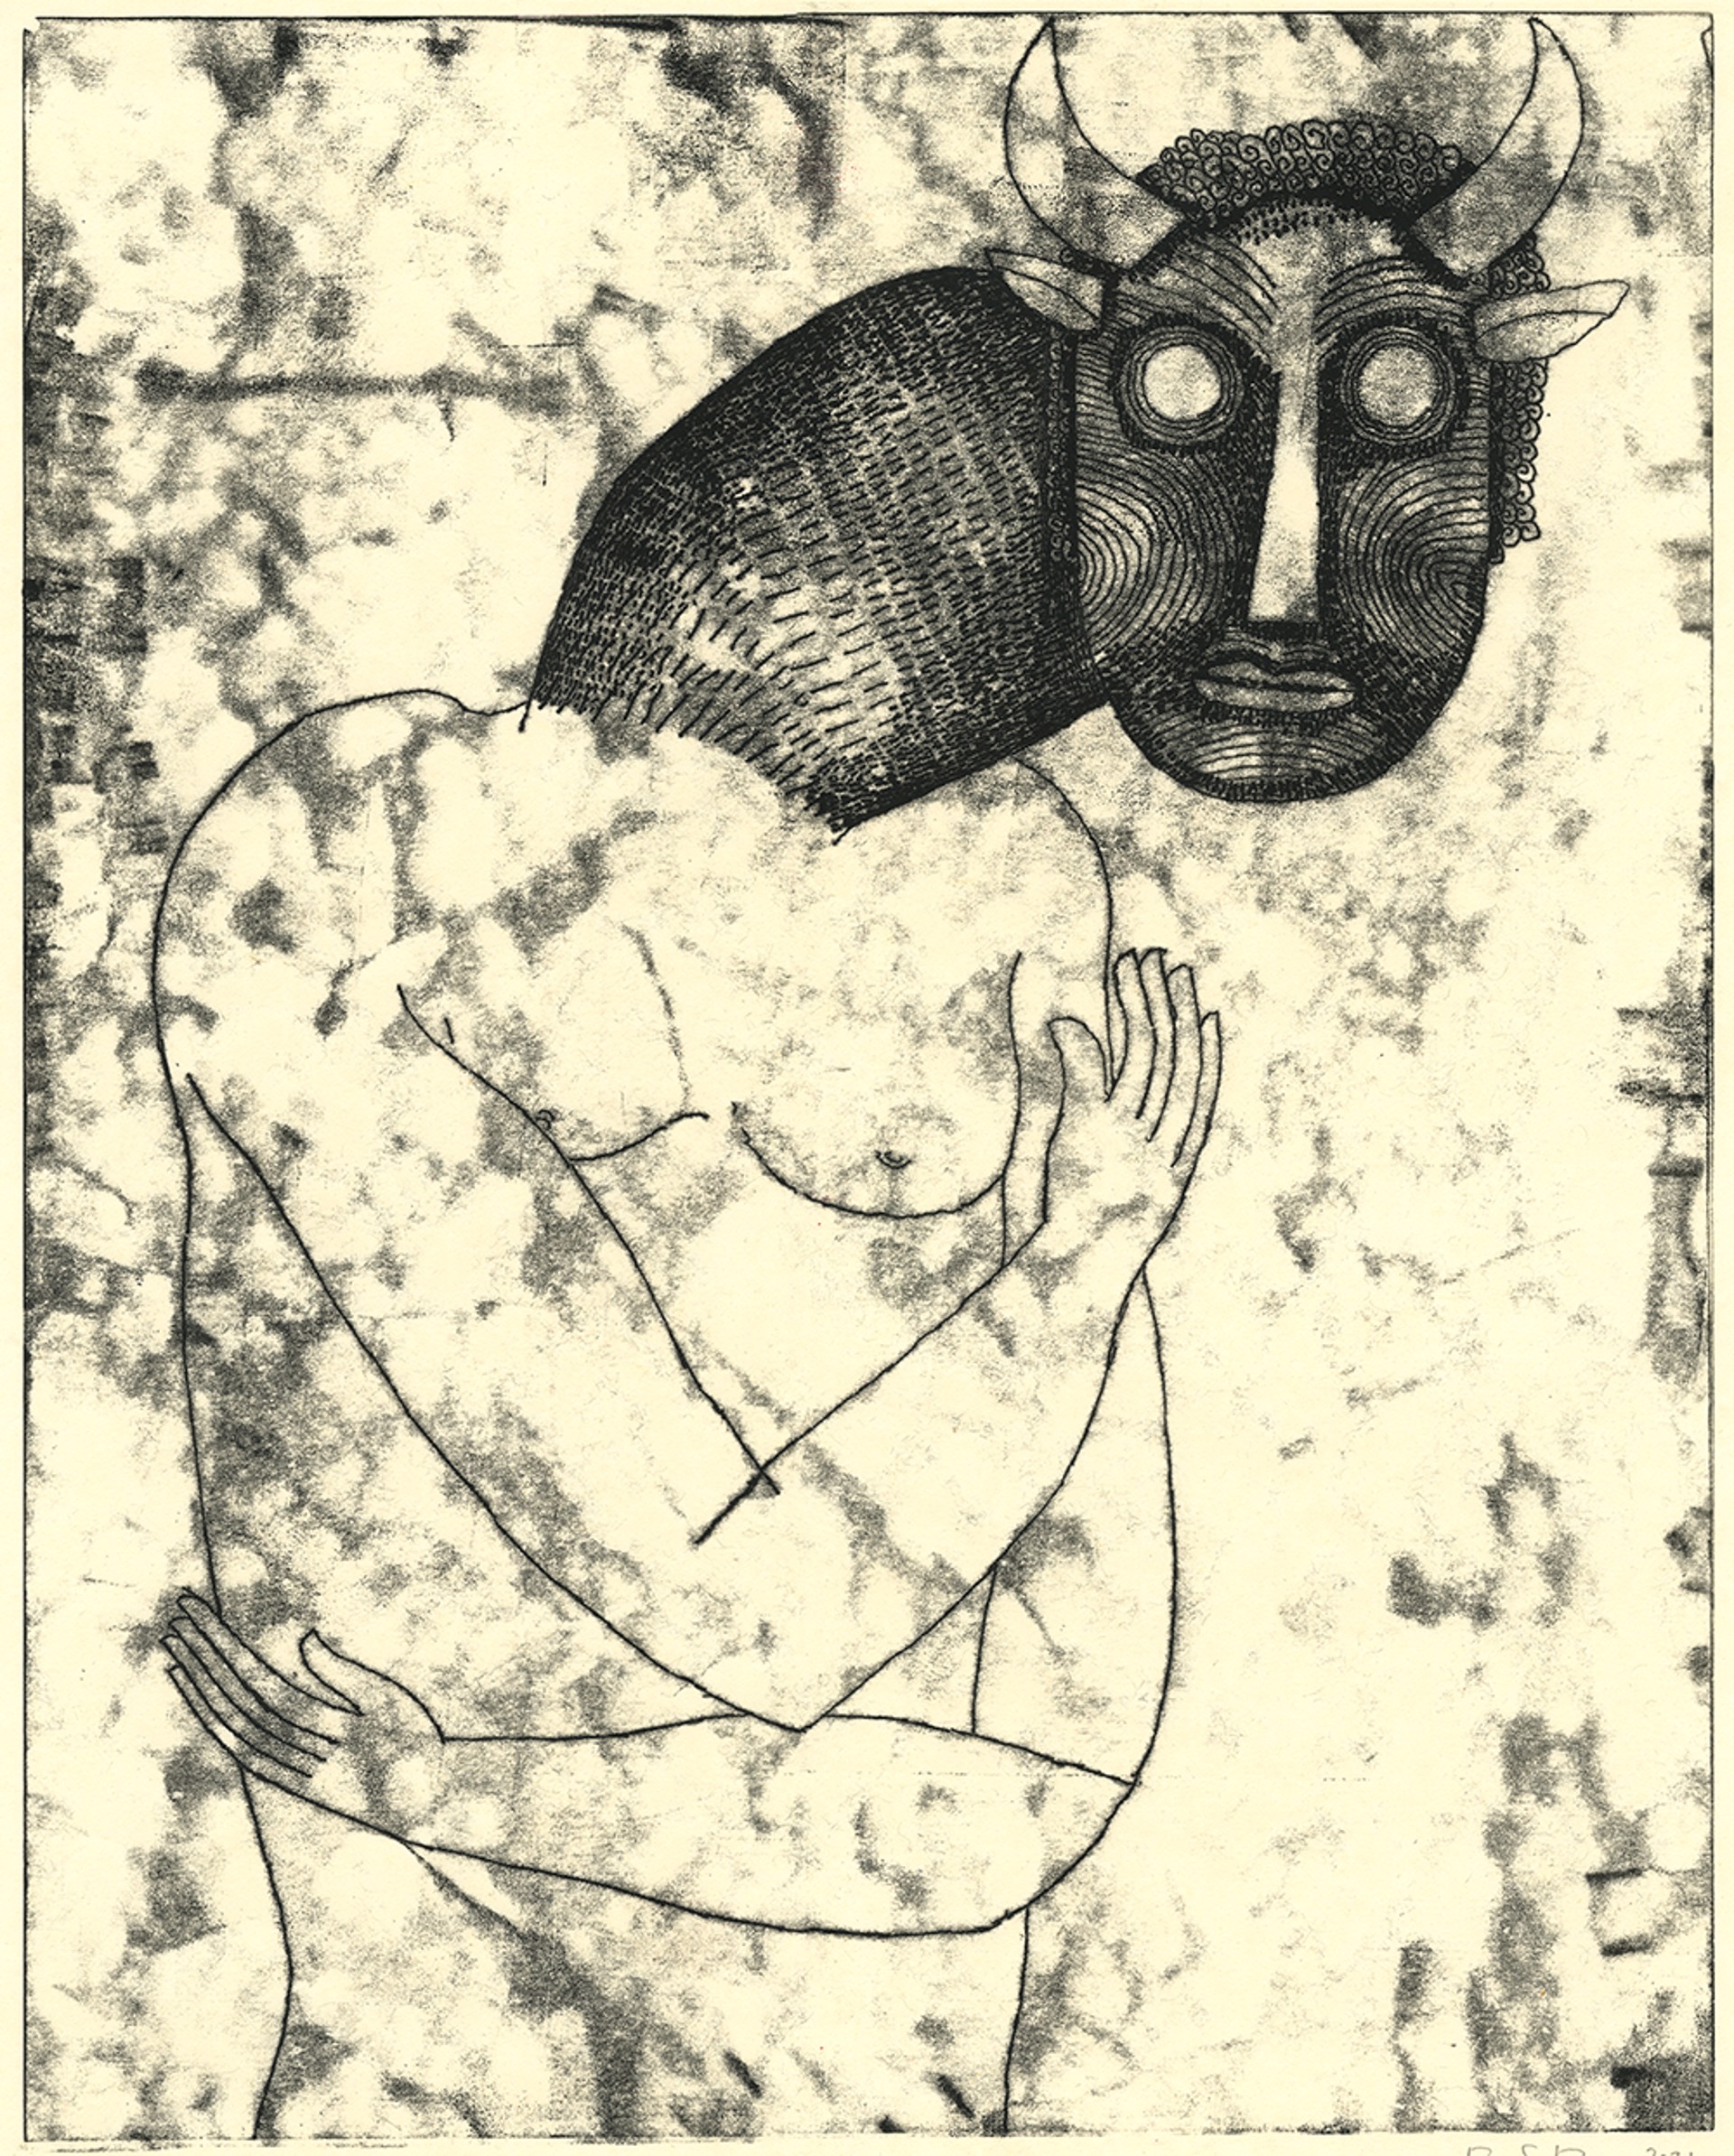 Minotaur No. 393 by Richard Downs